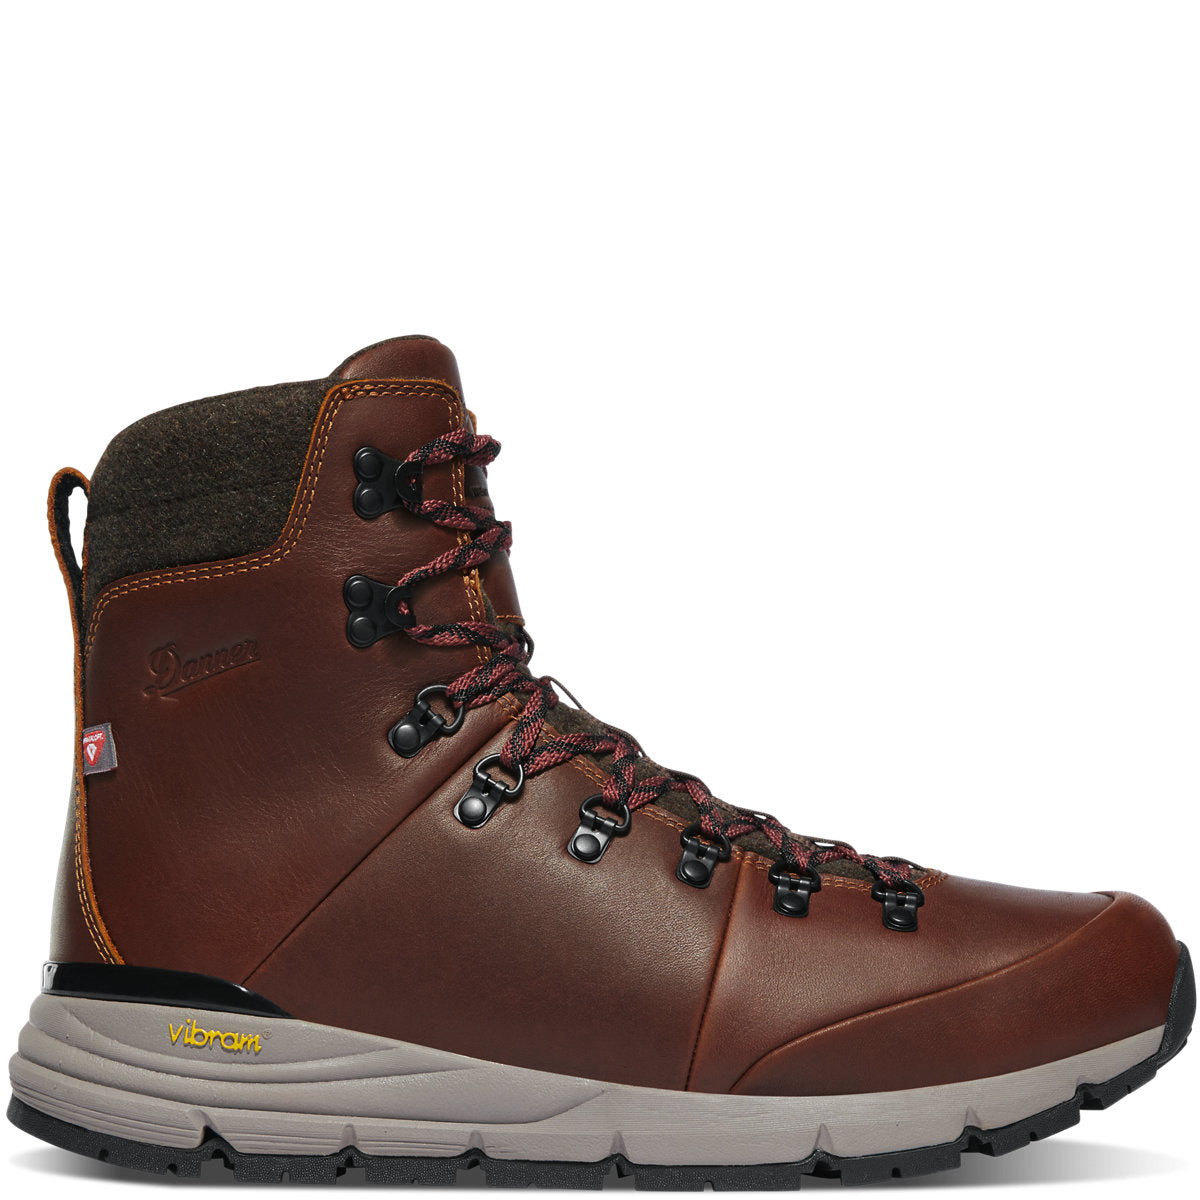 DANNER - Arctic 600 Side-Zip Boots - Roasted Pecan/Fired Brick 200G